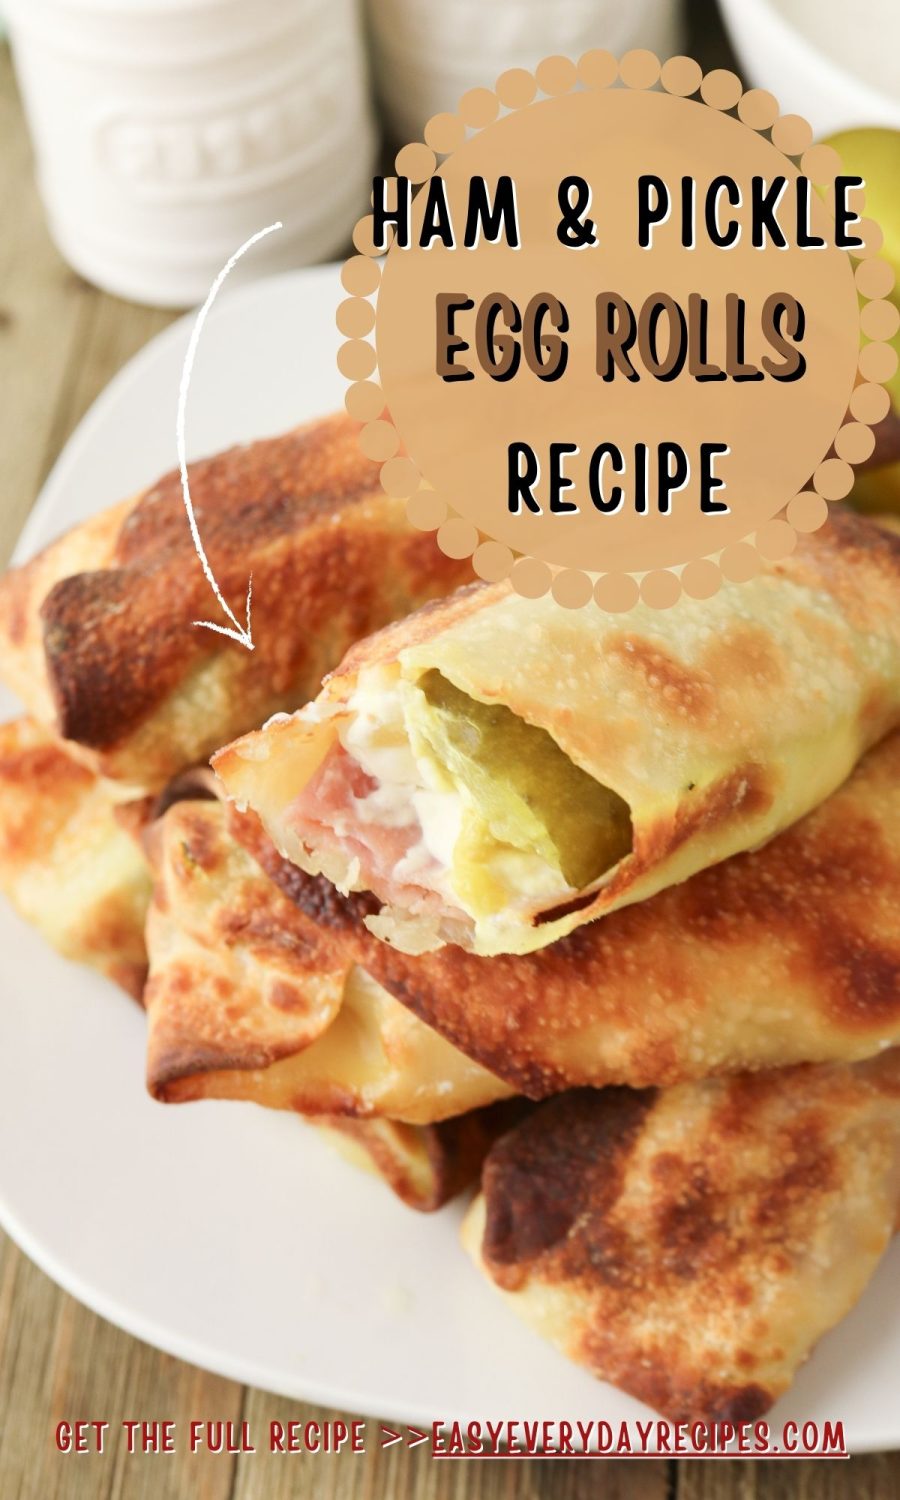 Ham and pickle egg rolls recipe.